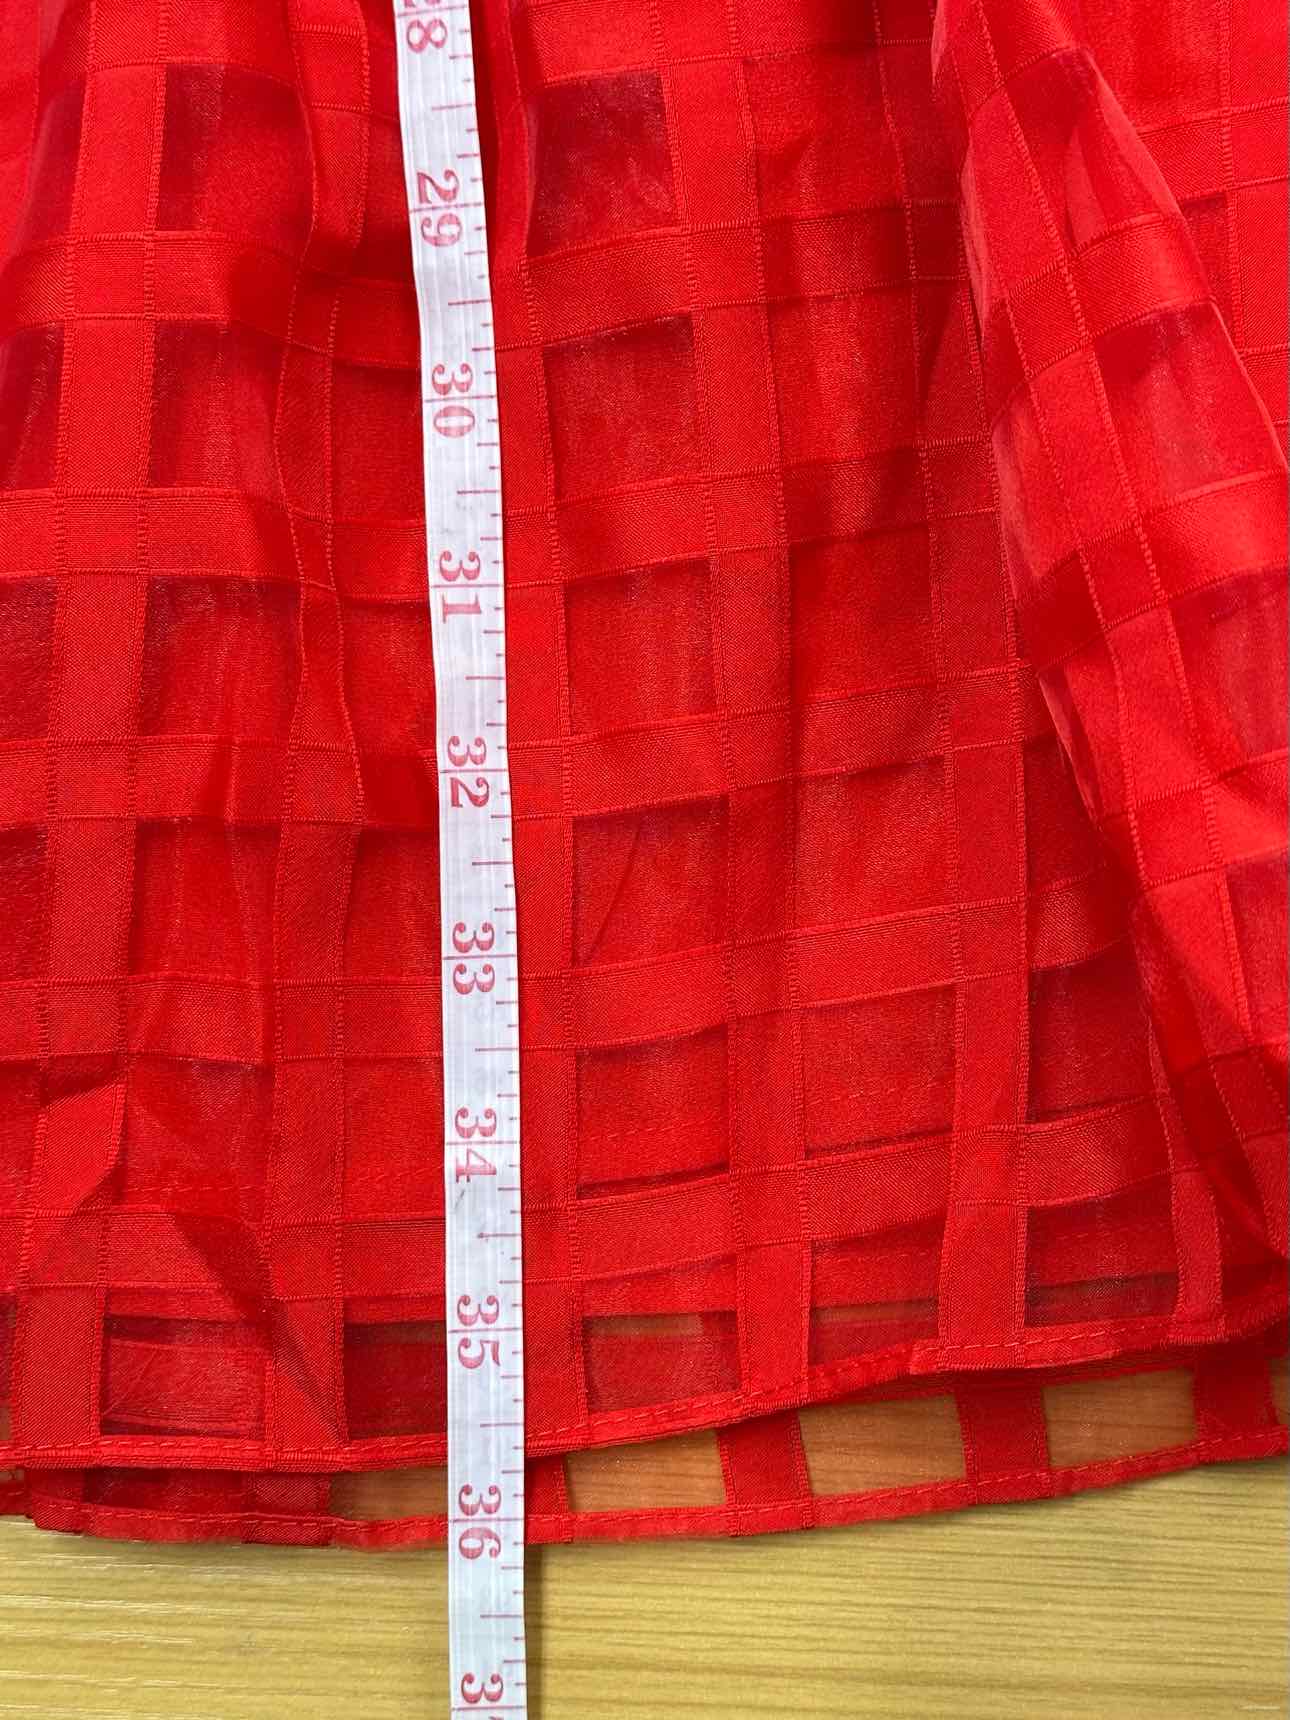 ENGLISH FACTORY NWT Red Organza Mini Dress Size L